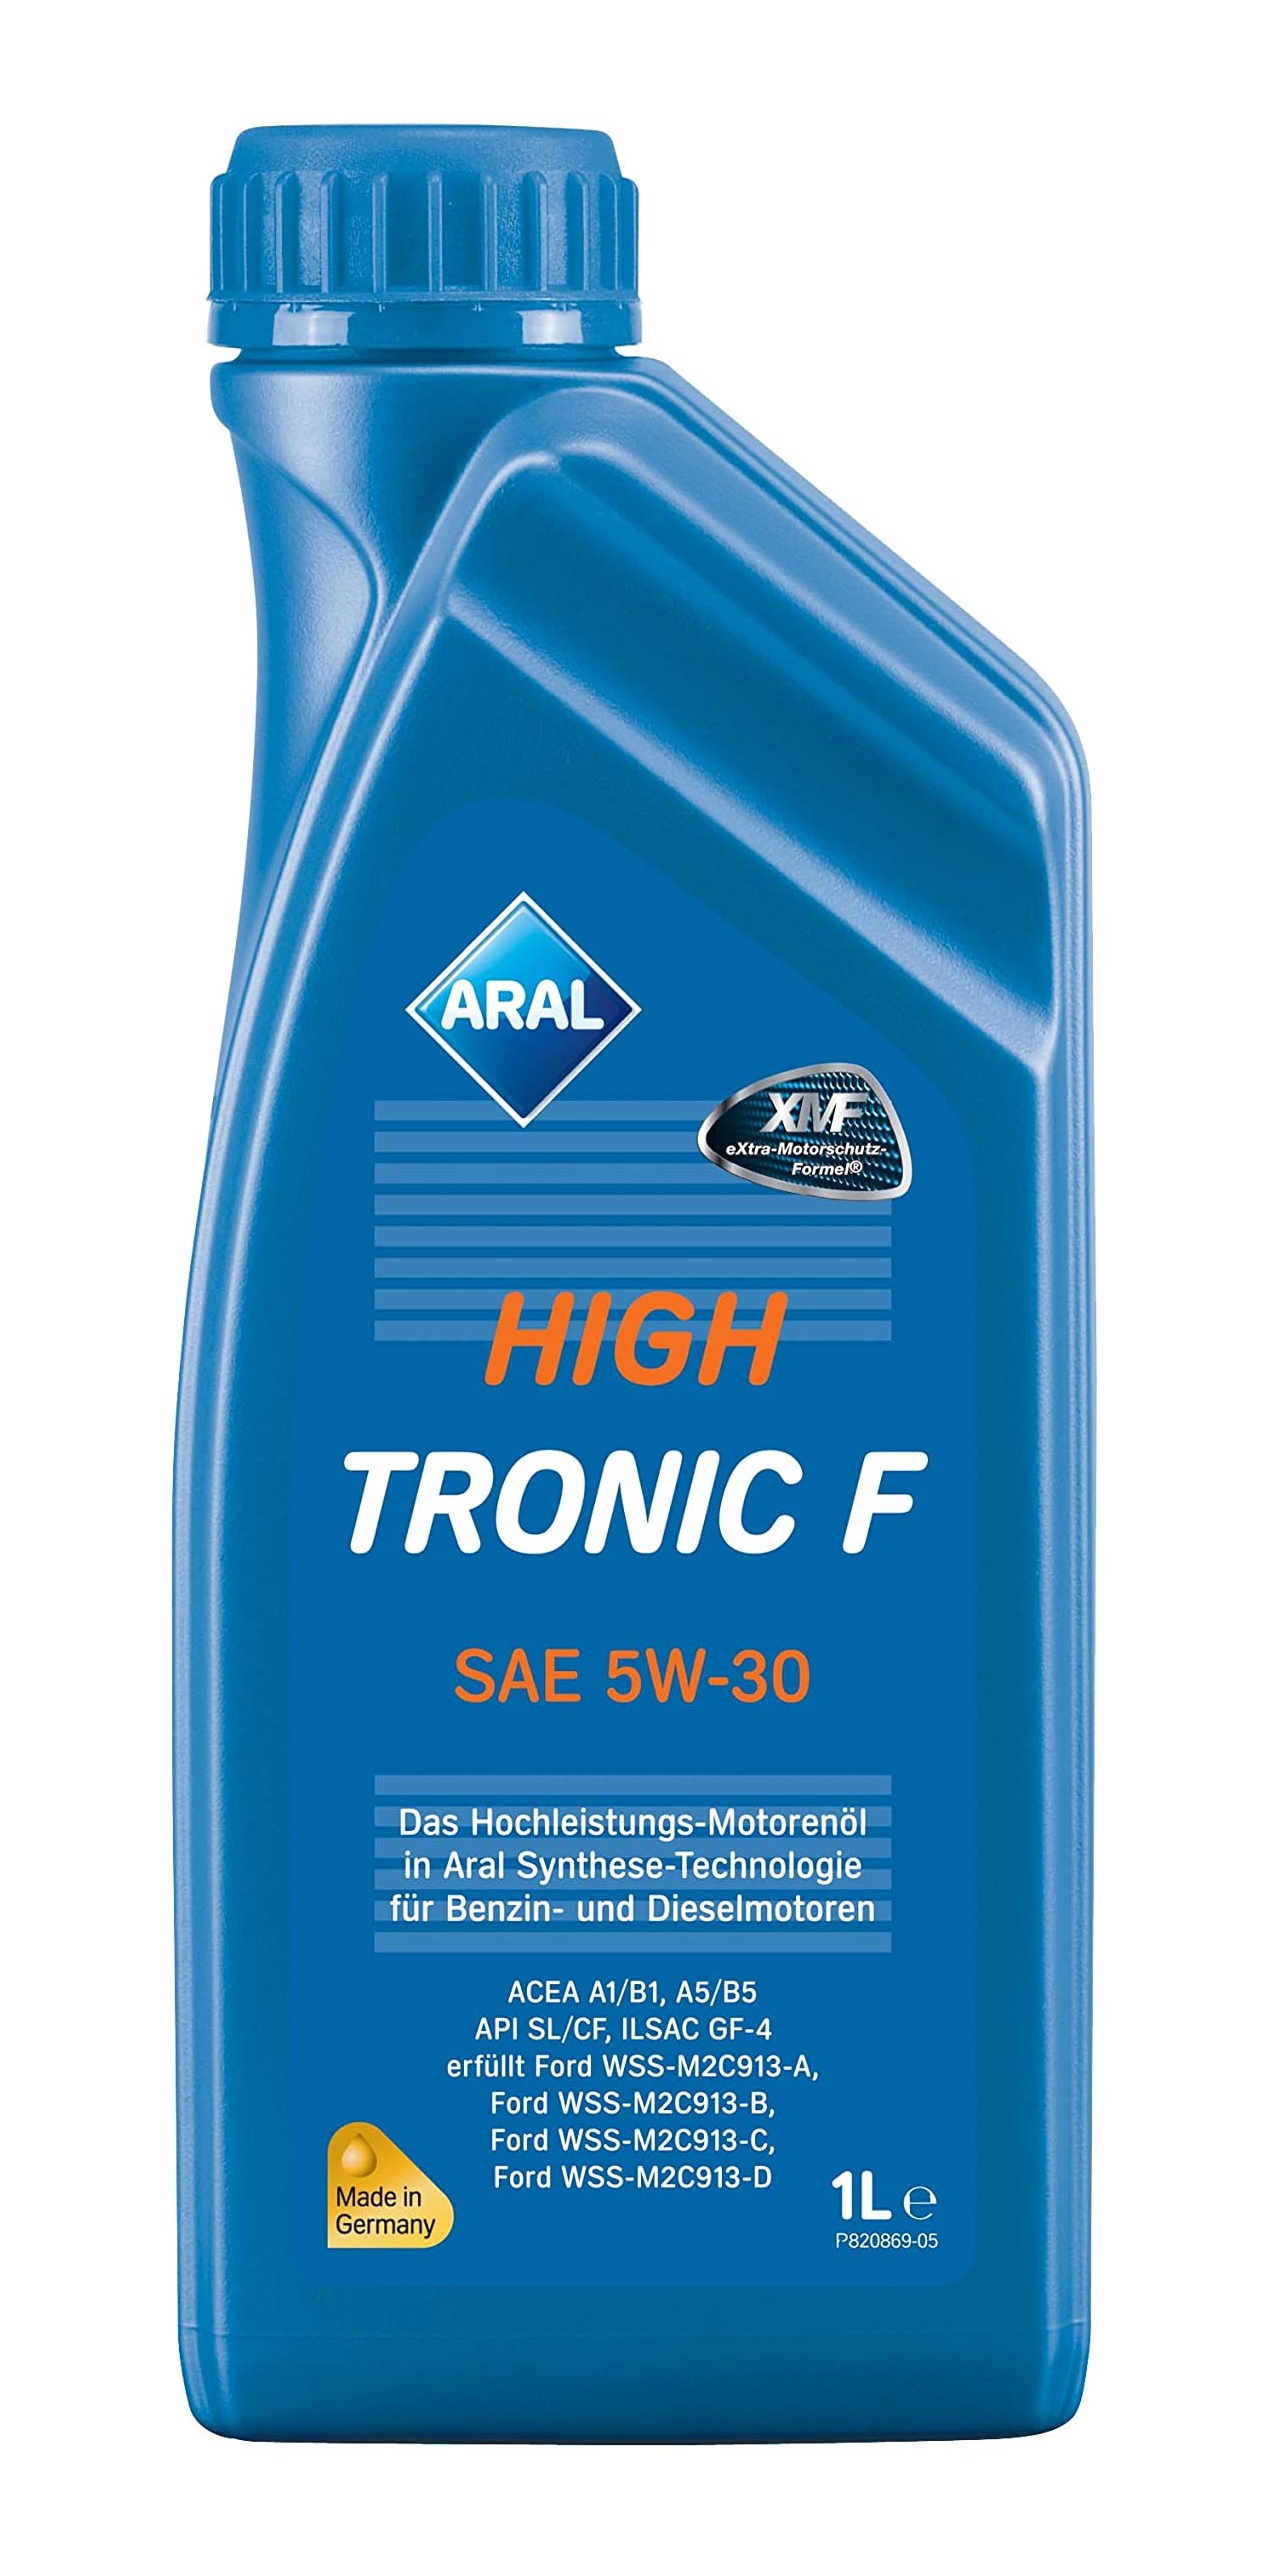 hightronic f 5w-30